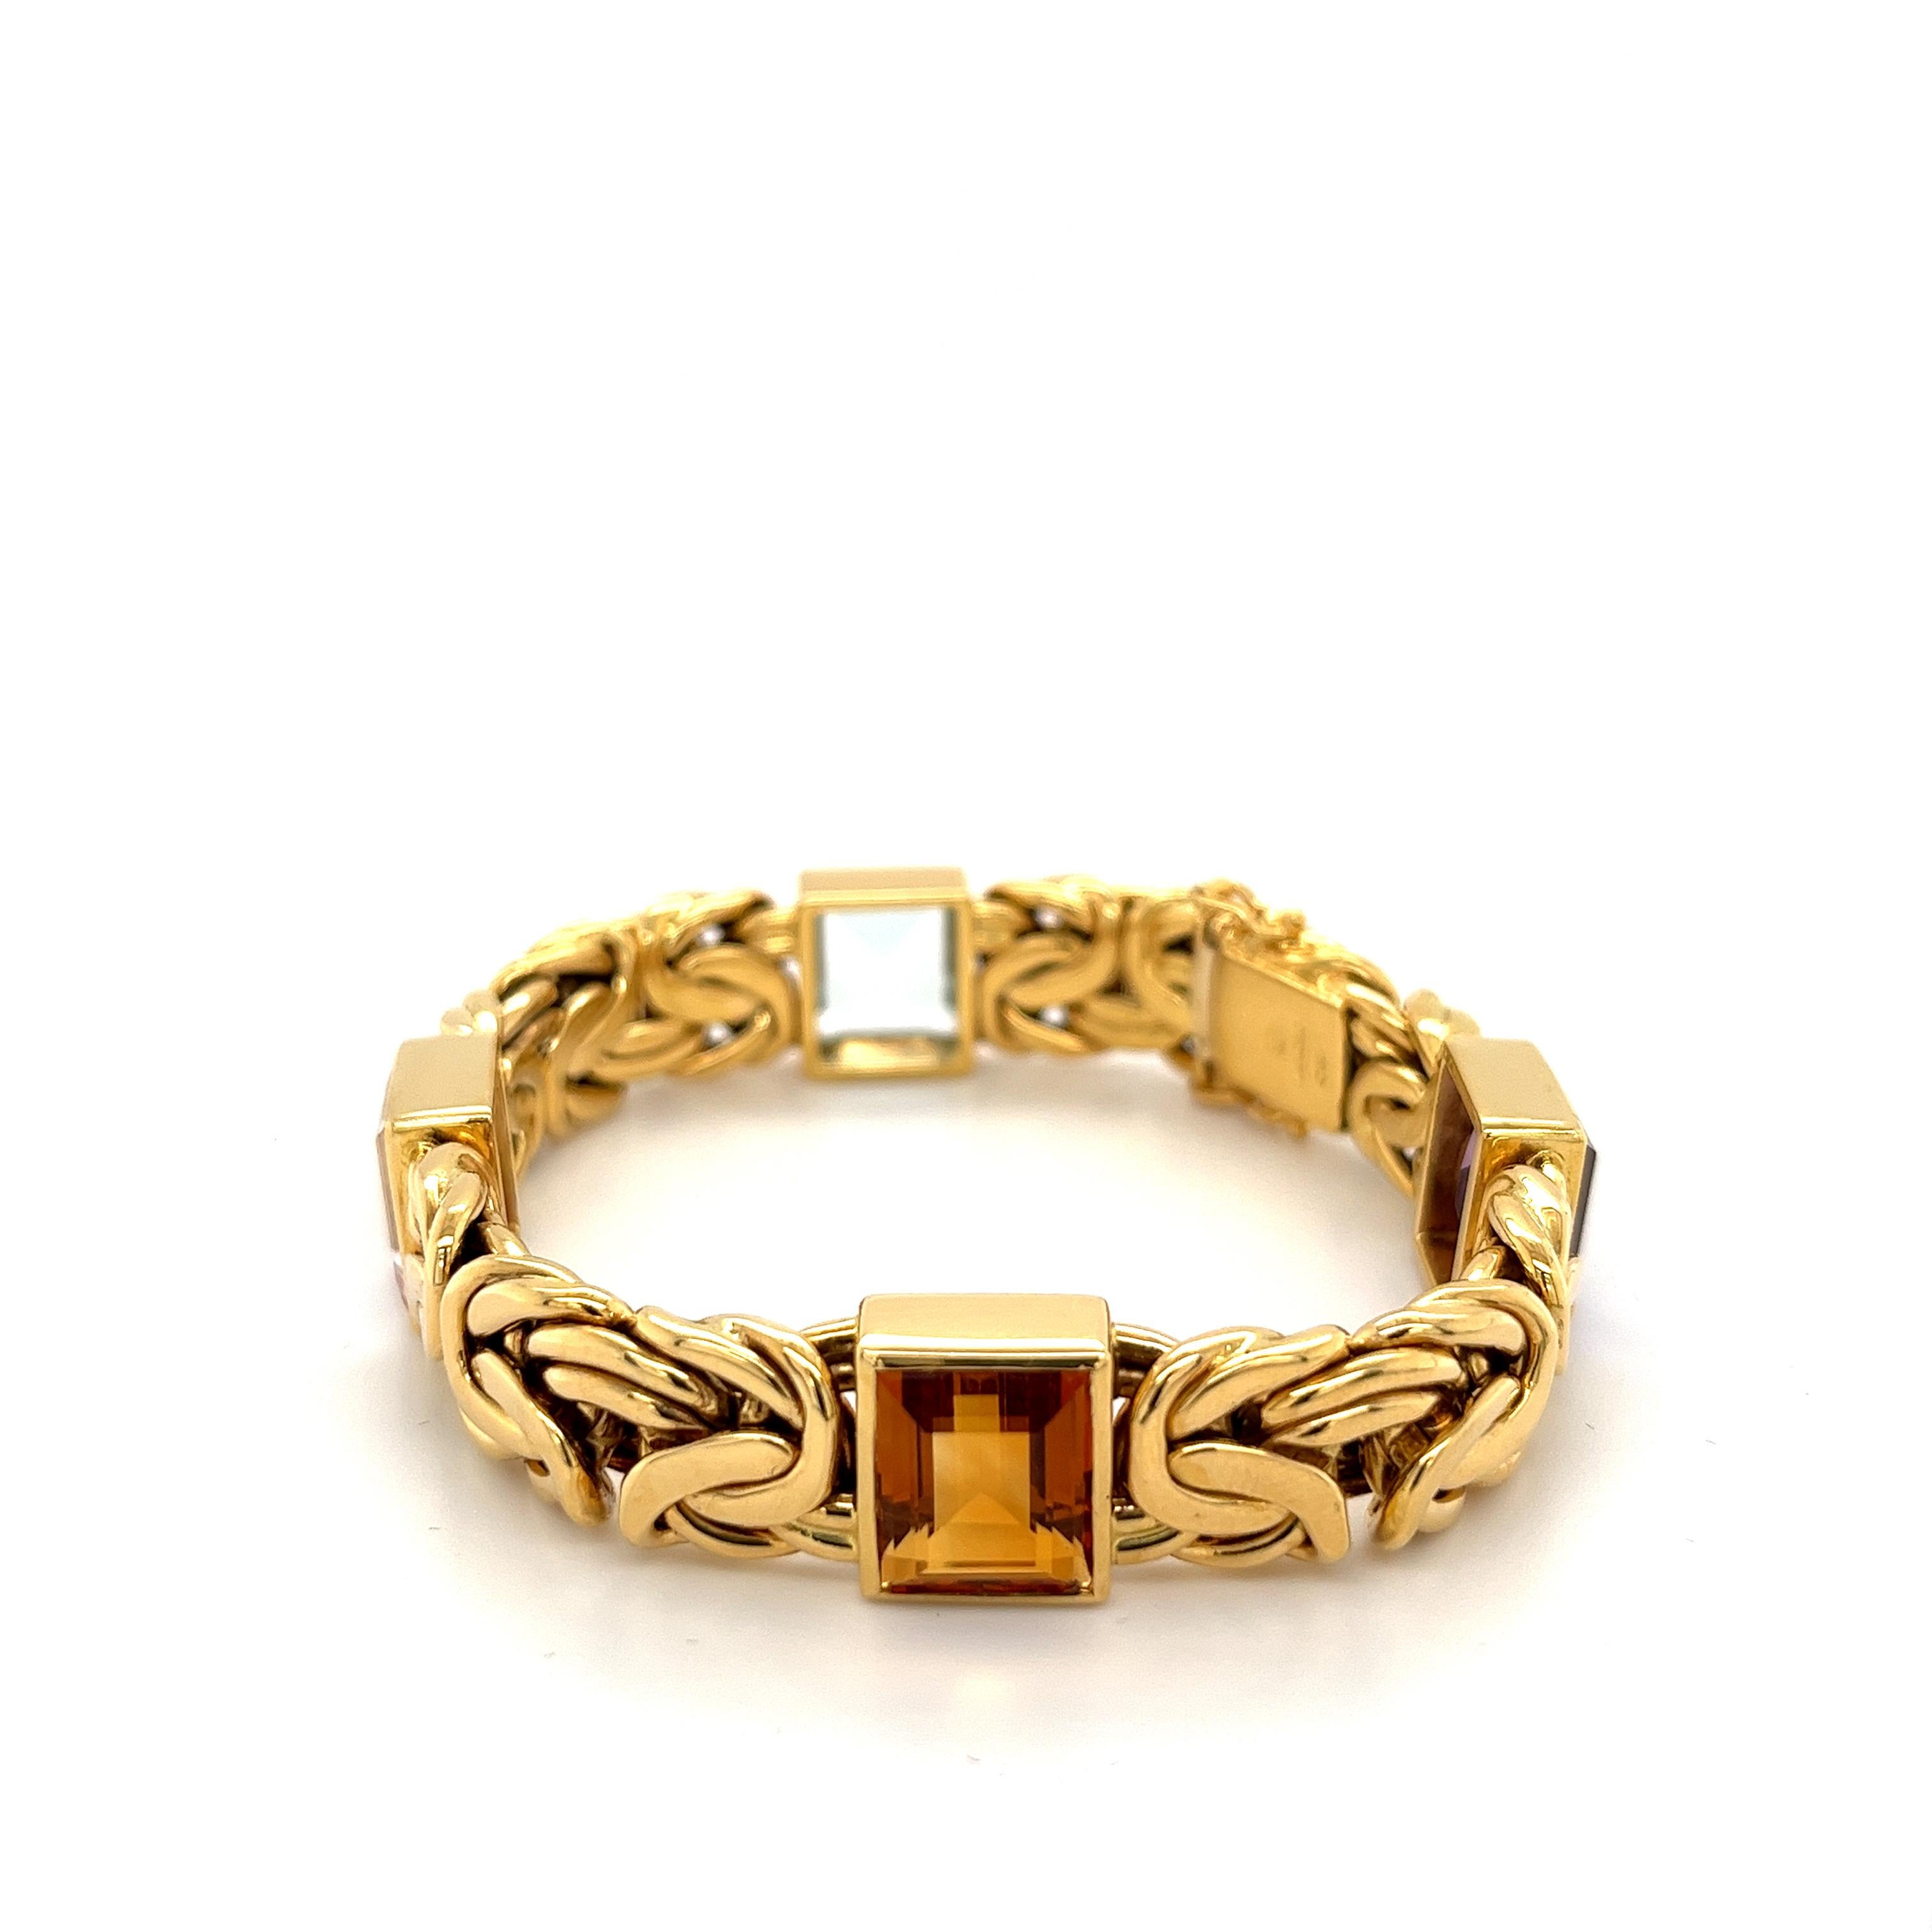 boy gold bracelet designs with price